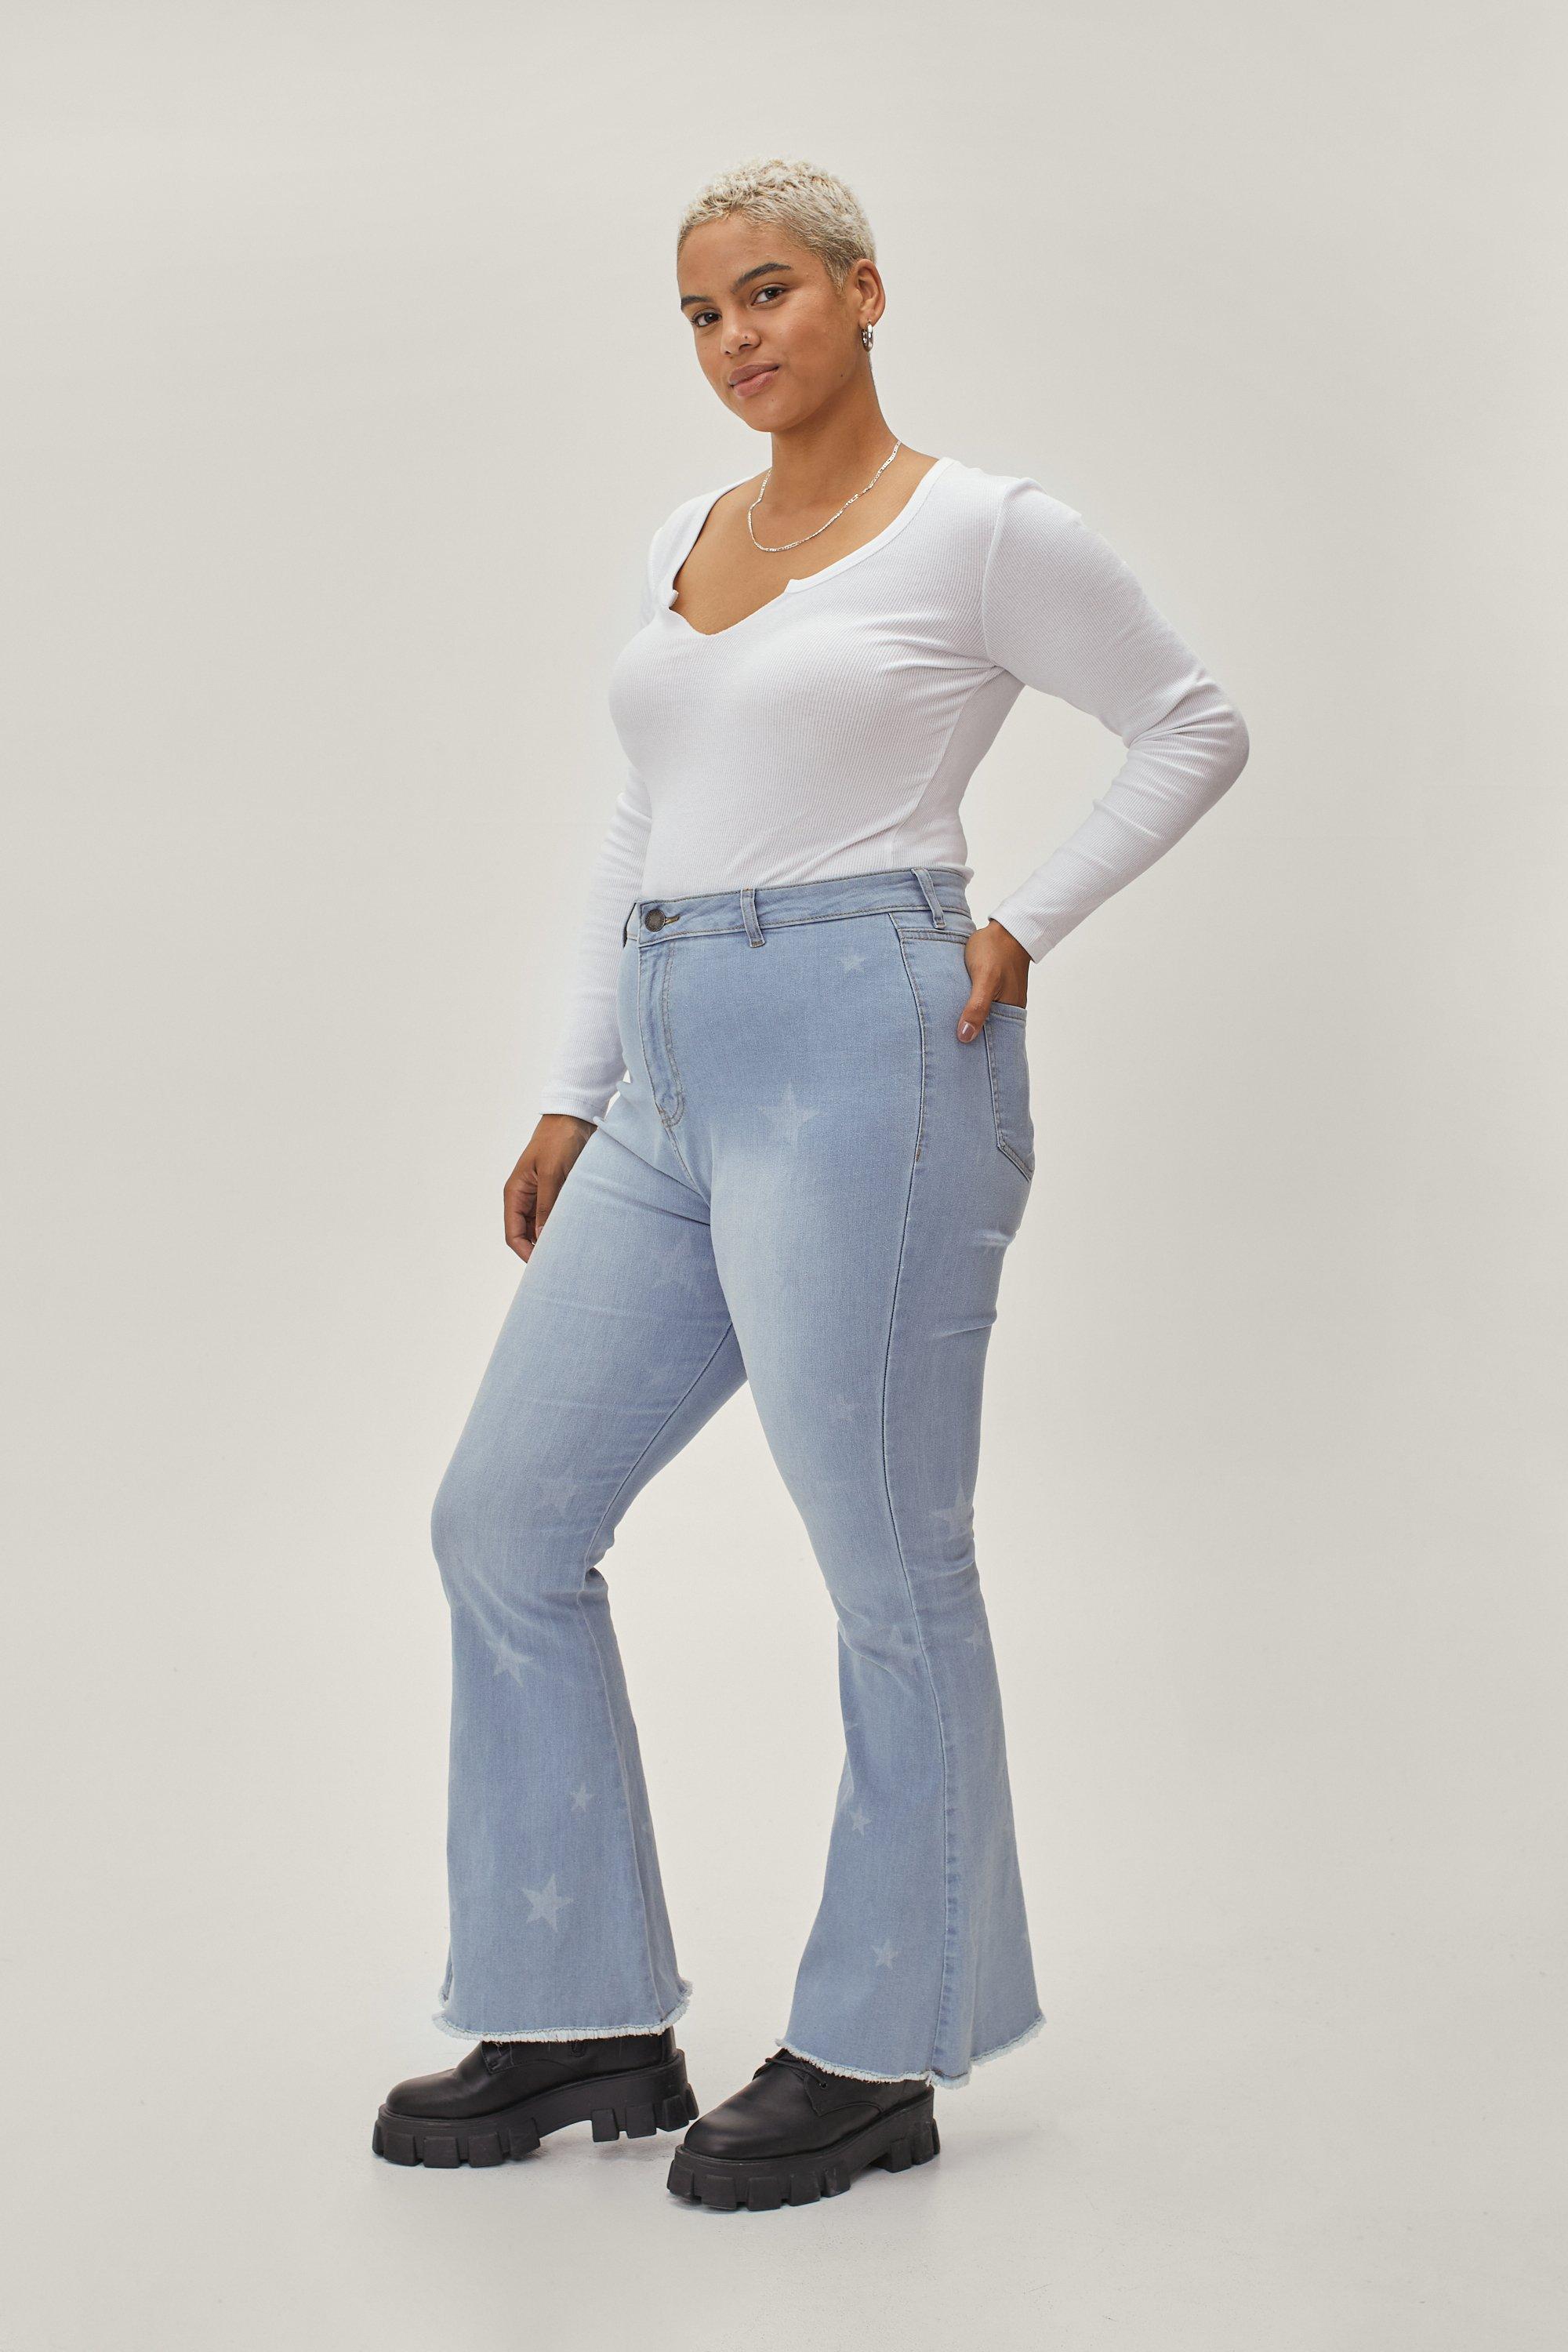 Plus Size Denim Star Print Flare Jean